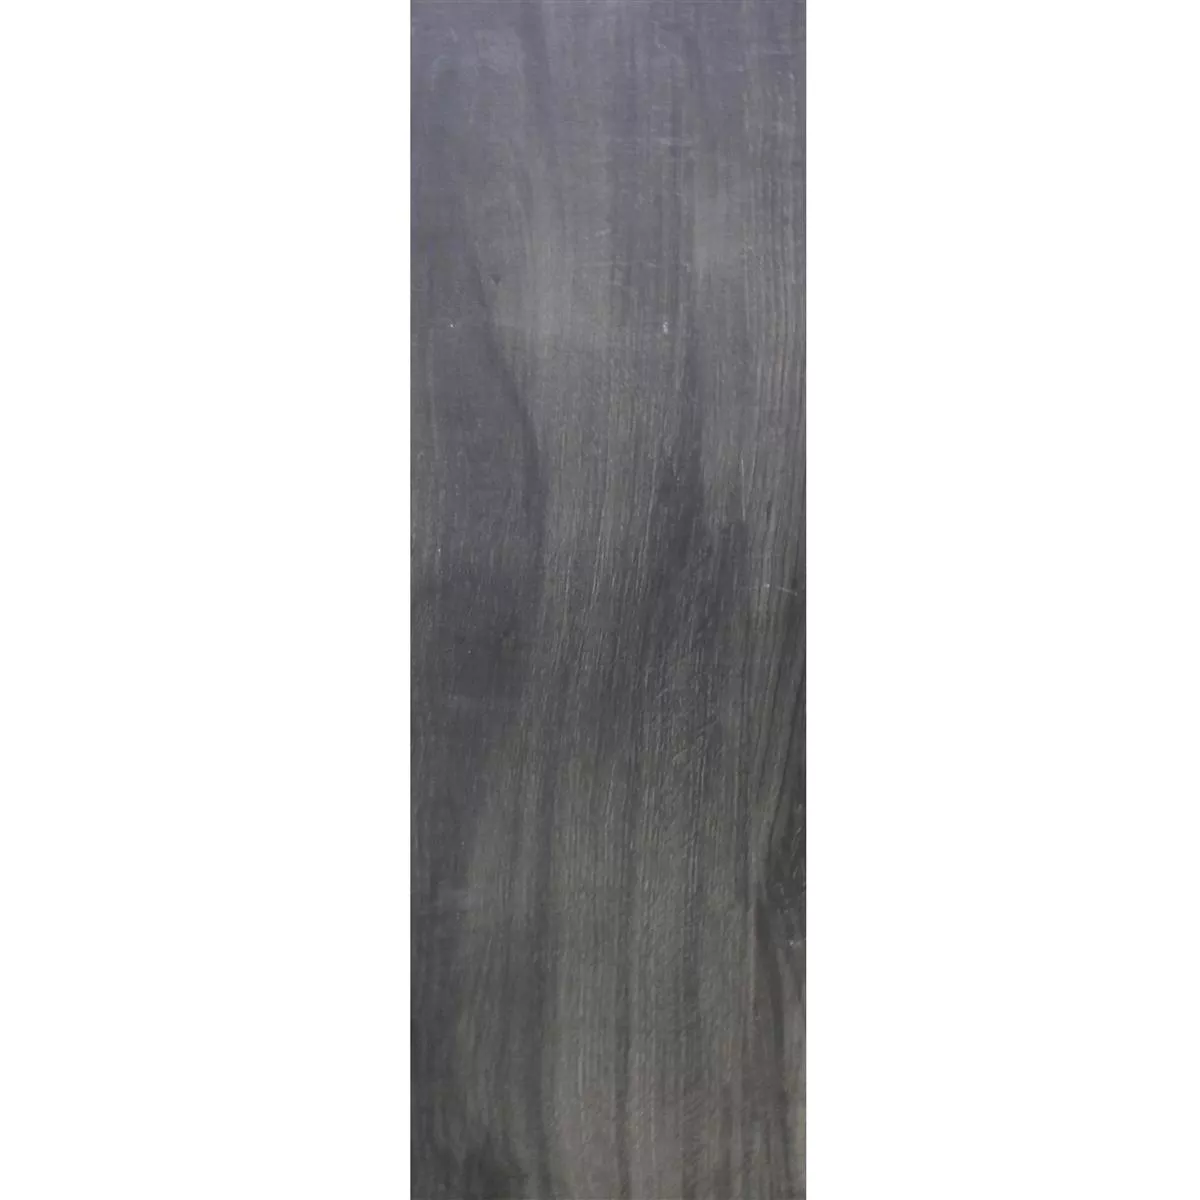 Floor Tiles Elmwood Wood Optic 20x120cm Anthracite Grey